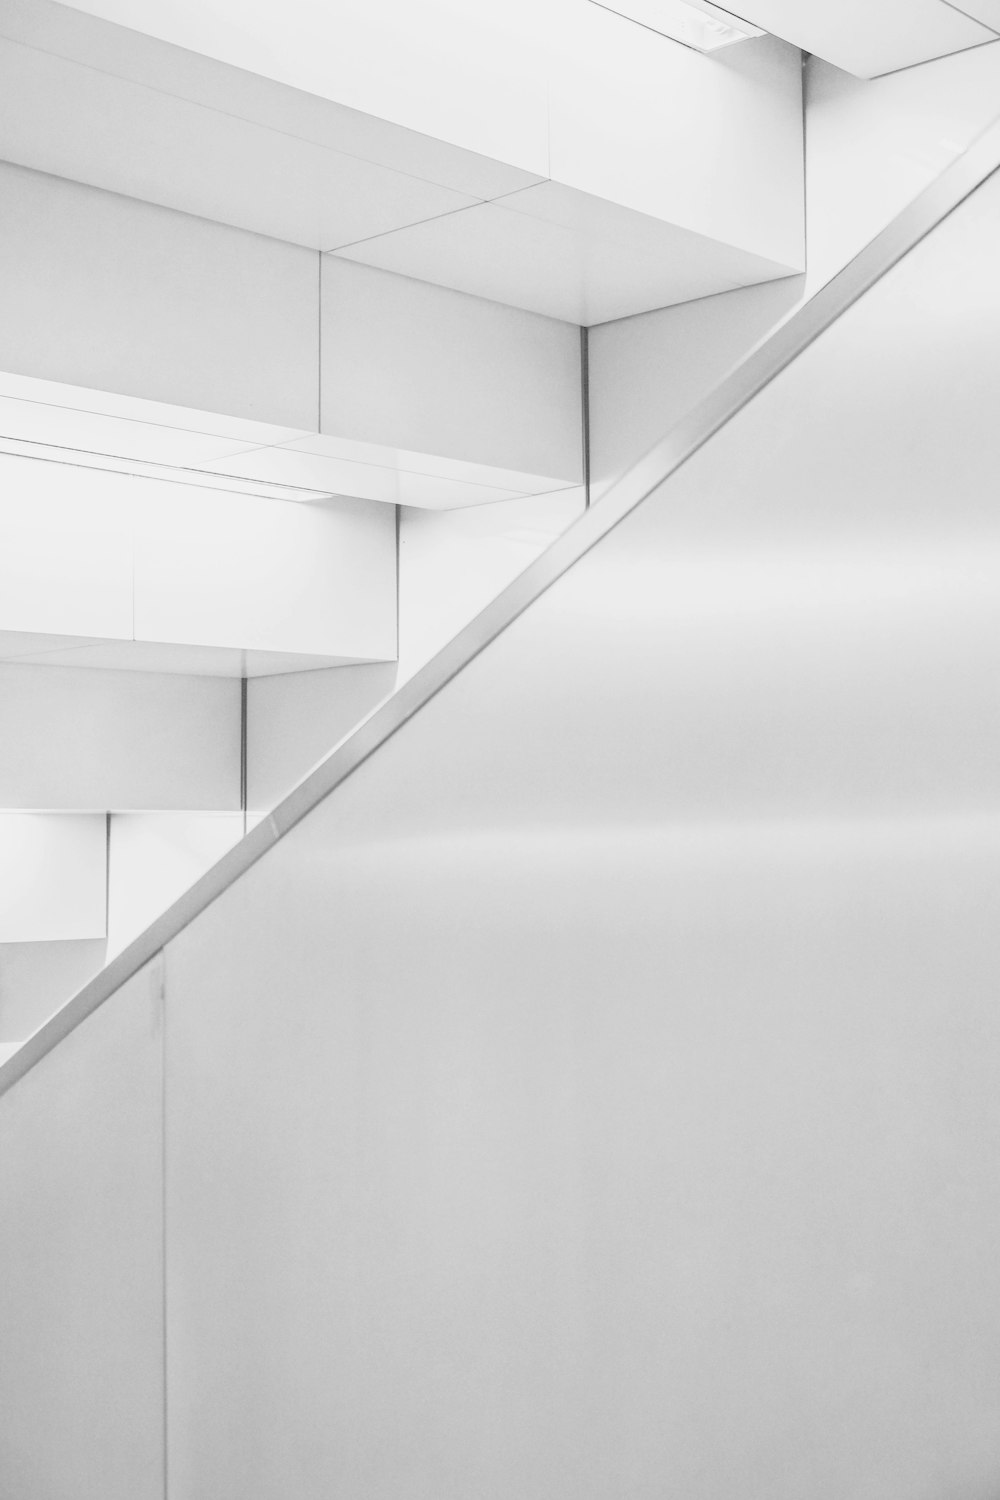 Foto de escalera de cerámica blanca